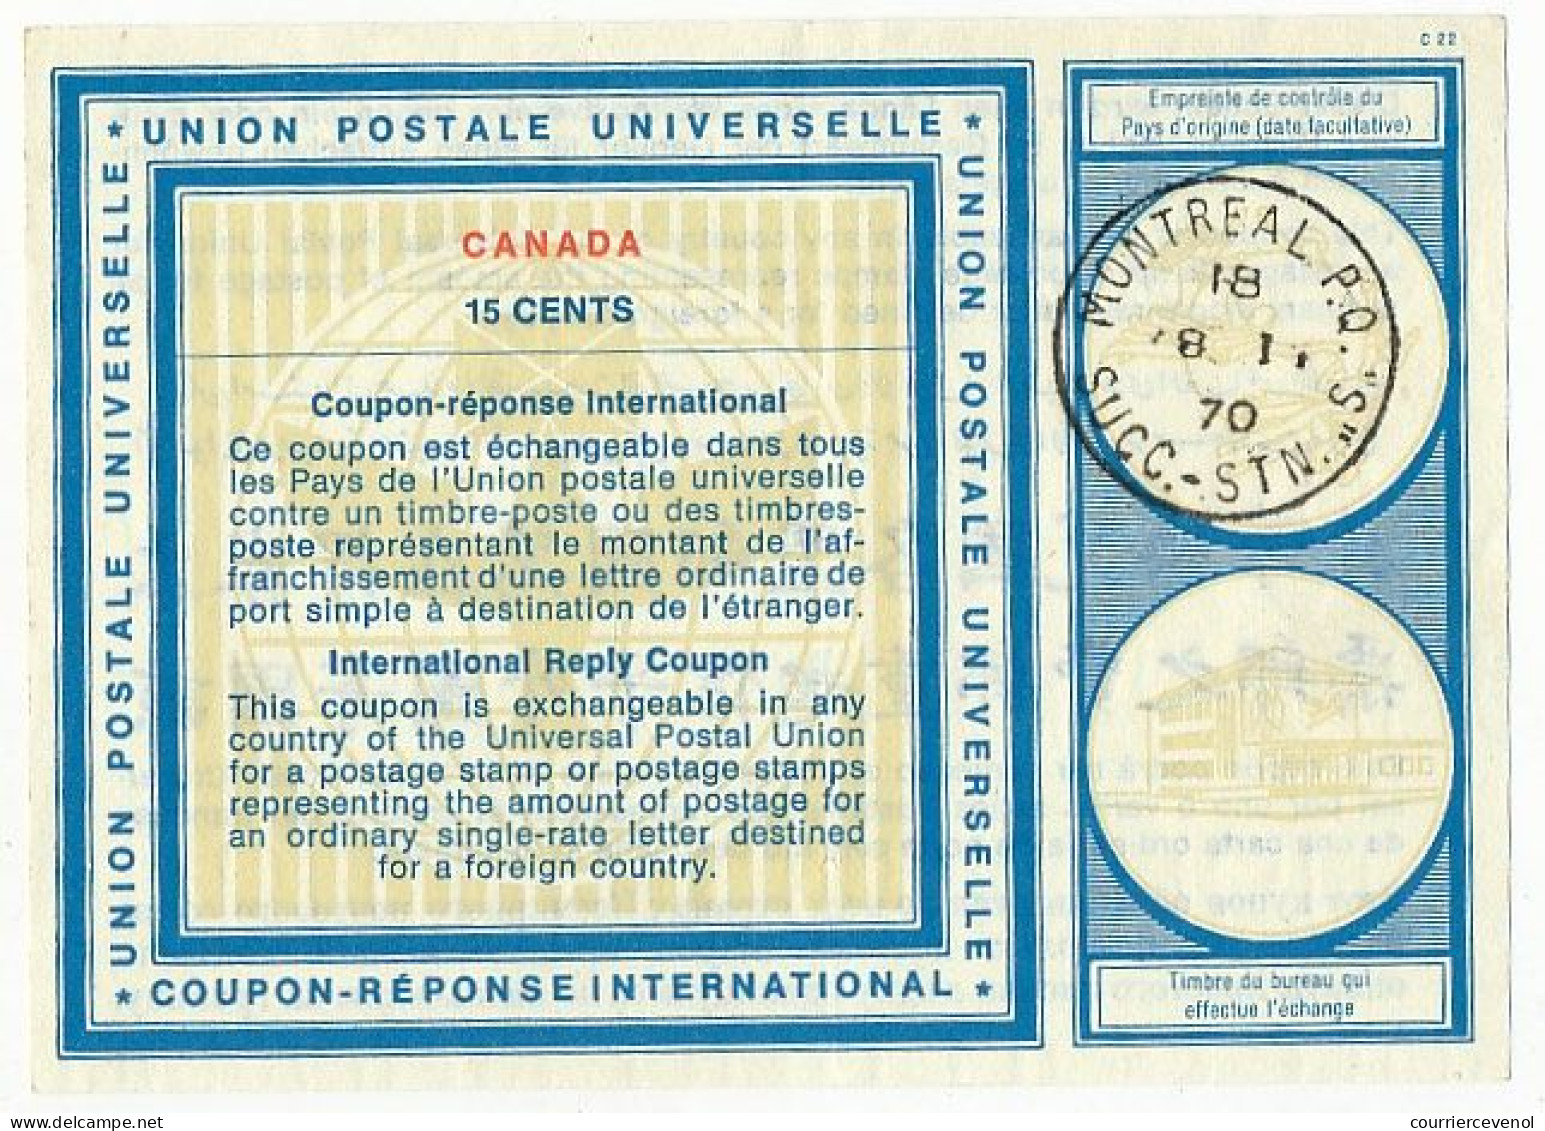 CANADA - COUPON REPONSE INTERNATIONAL. INTERNATIONAL REPLY COUPON. 15 CENTS. MONTREAL P.Q. - Coupons-Réponses